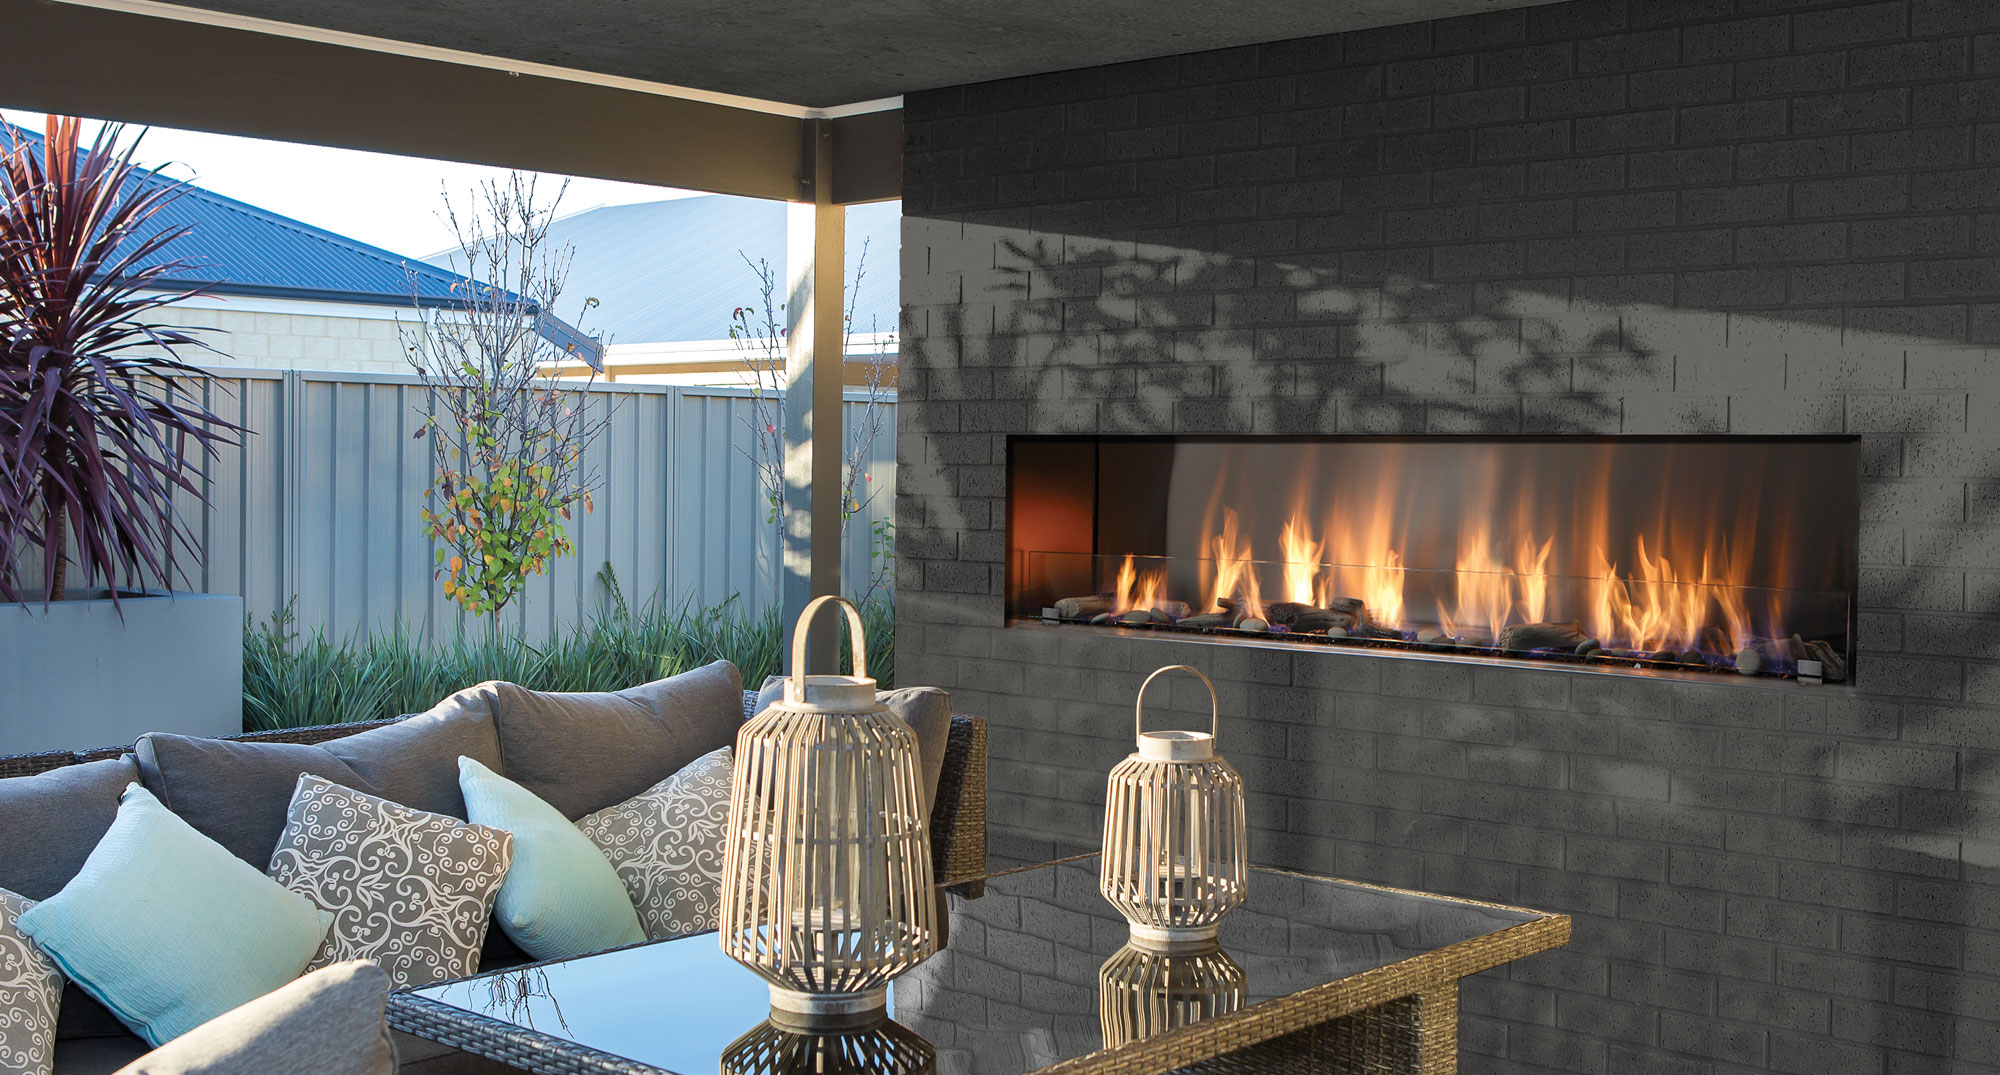 OFP7972S1N Outdoor Linear Gas Fireplace, MQG5C Glass Media, MQRBD3 Drift Wood, MQSTONE Decorative Stones